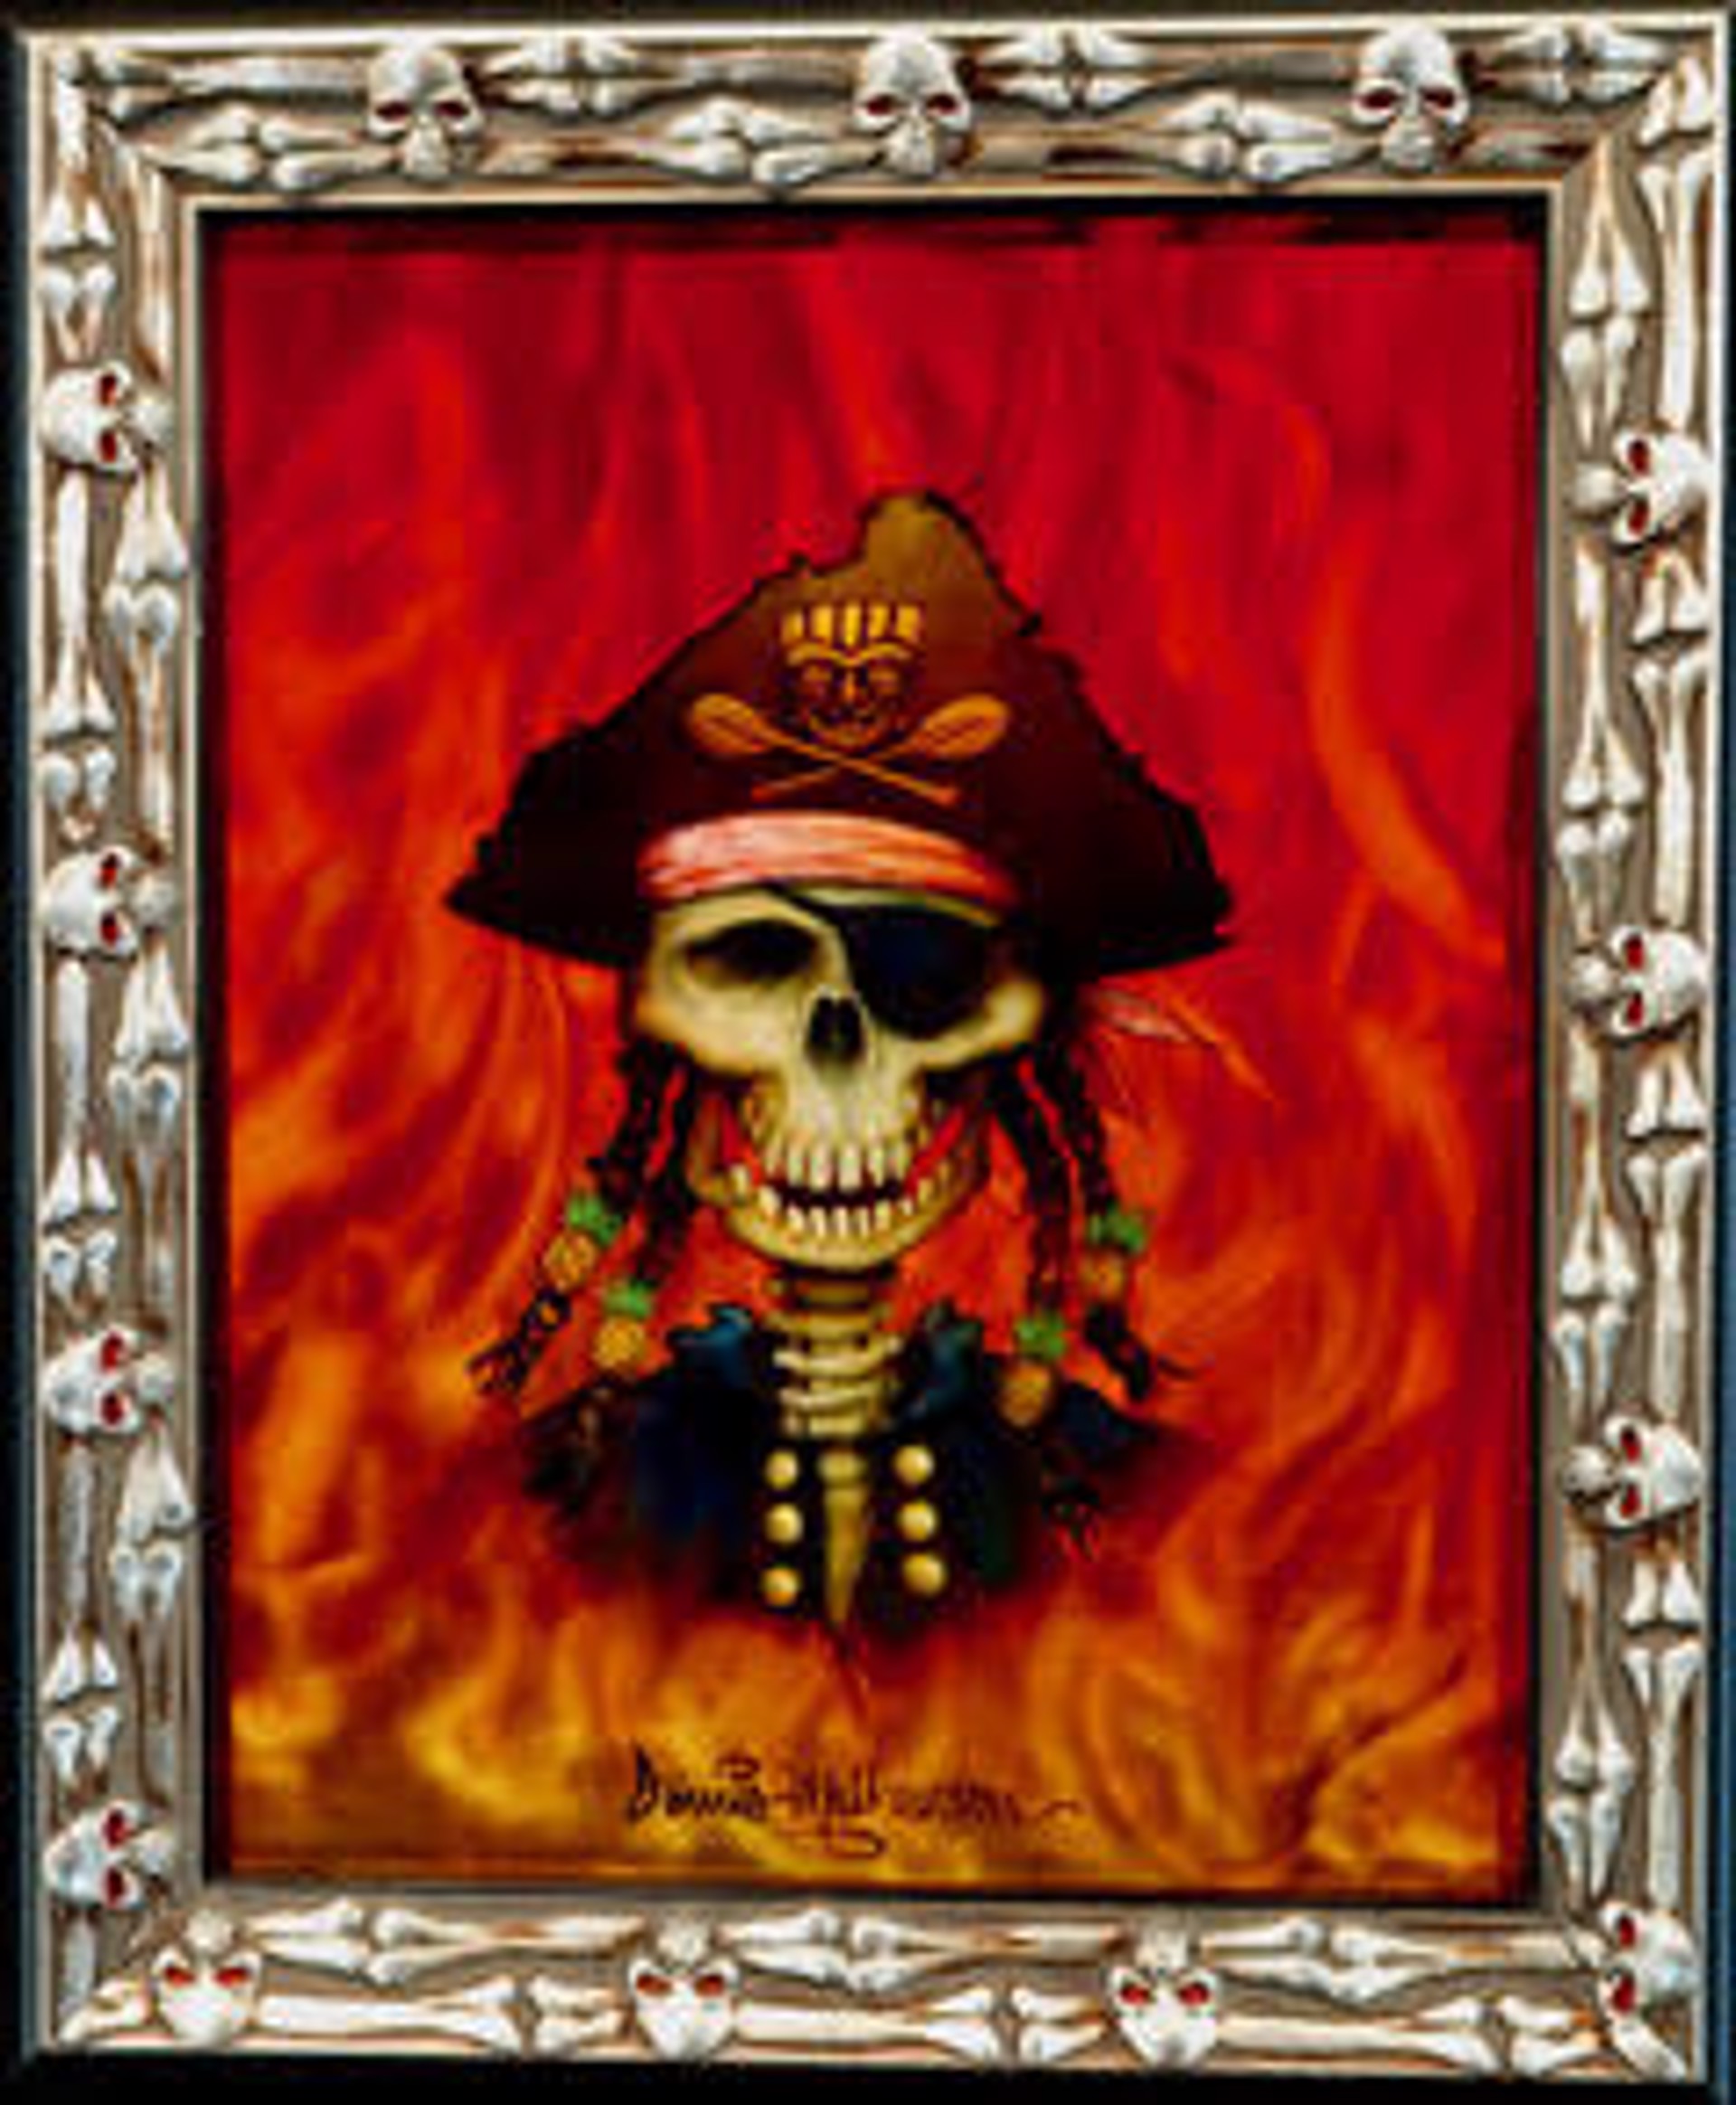 Skull Jack by Dennis Mathewson